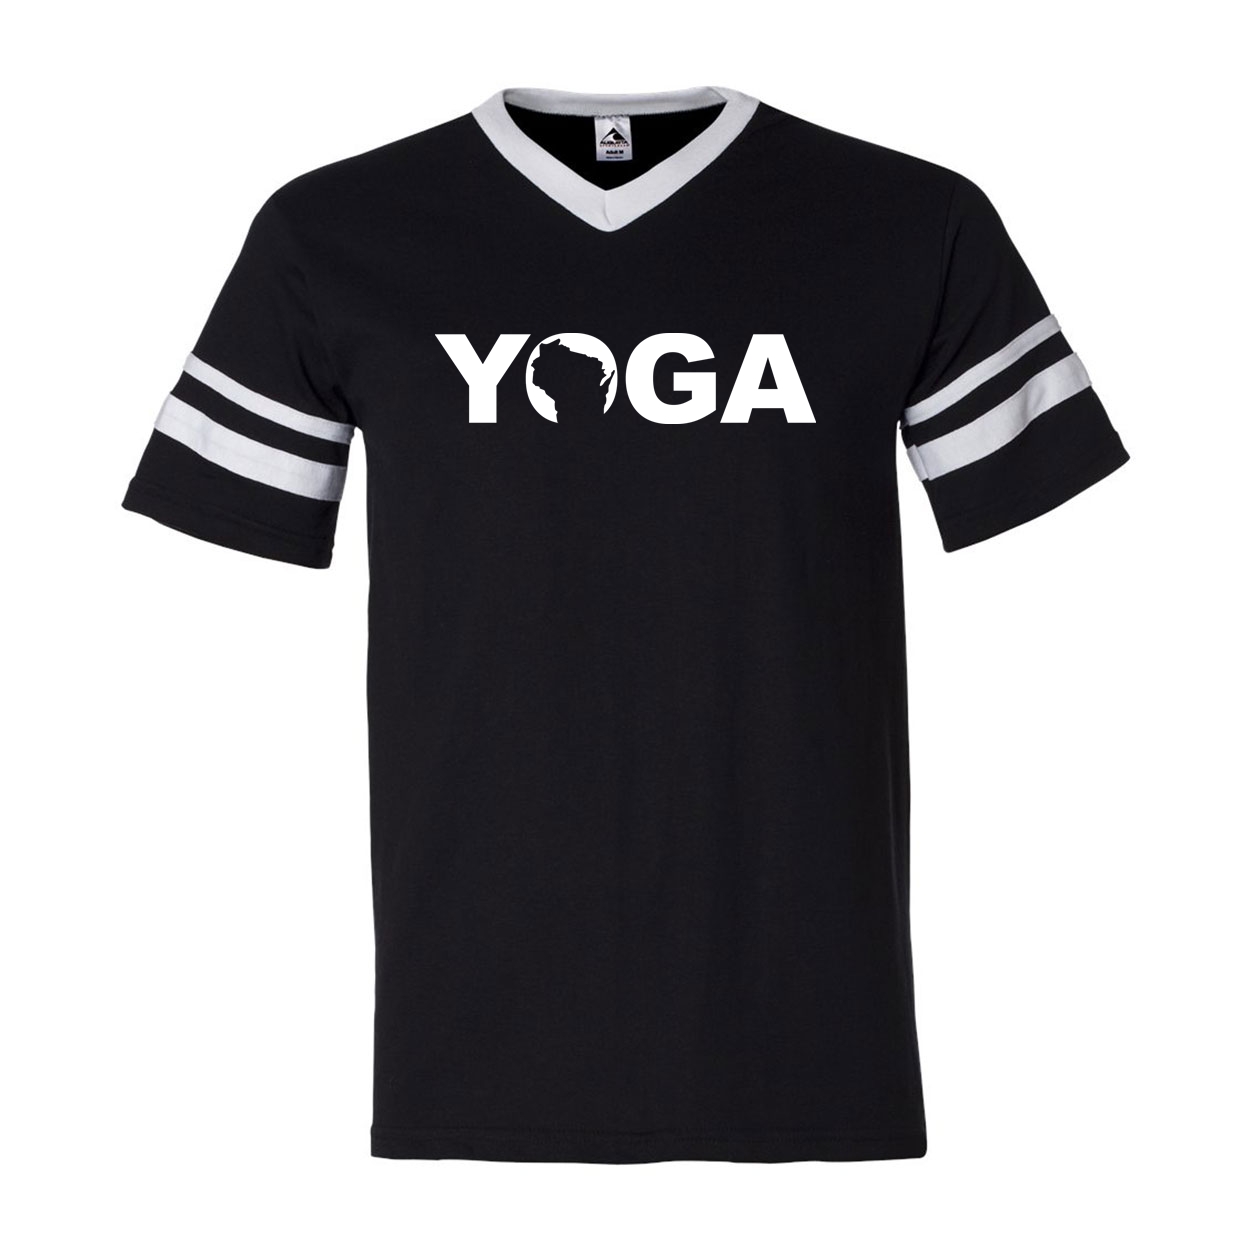 Yoga Wisconsin Classic Premium Striped Jersey T-Shirt Black/White (White Logo)